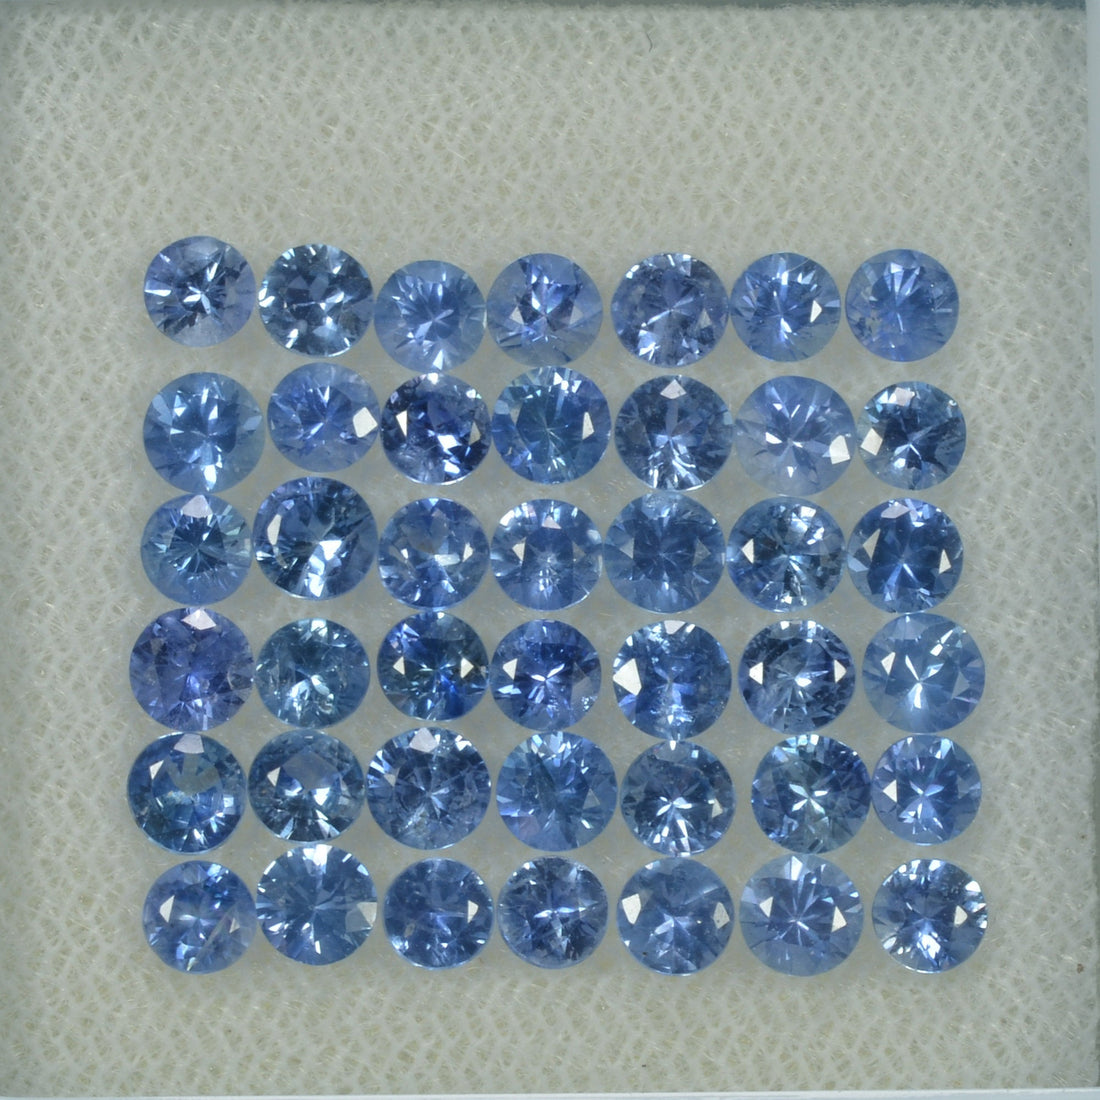 2.5-3.0 mm Natural Blue Sapphire Loose Gemstone Round Diamond Cut Vs Quality Color - Thai Gems Export Ltd.